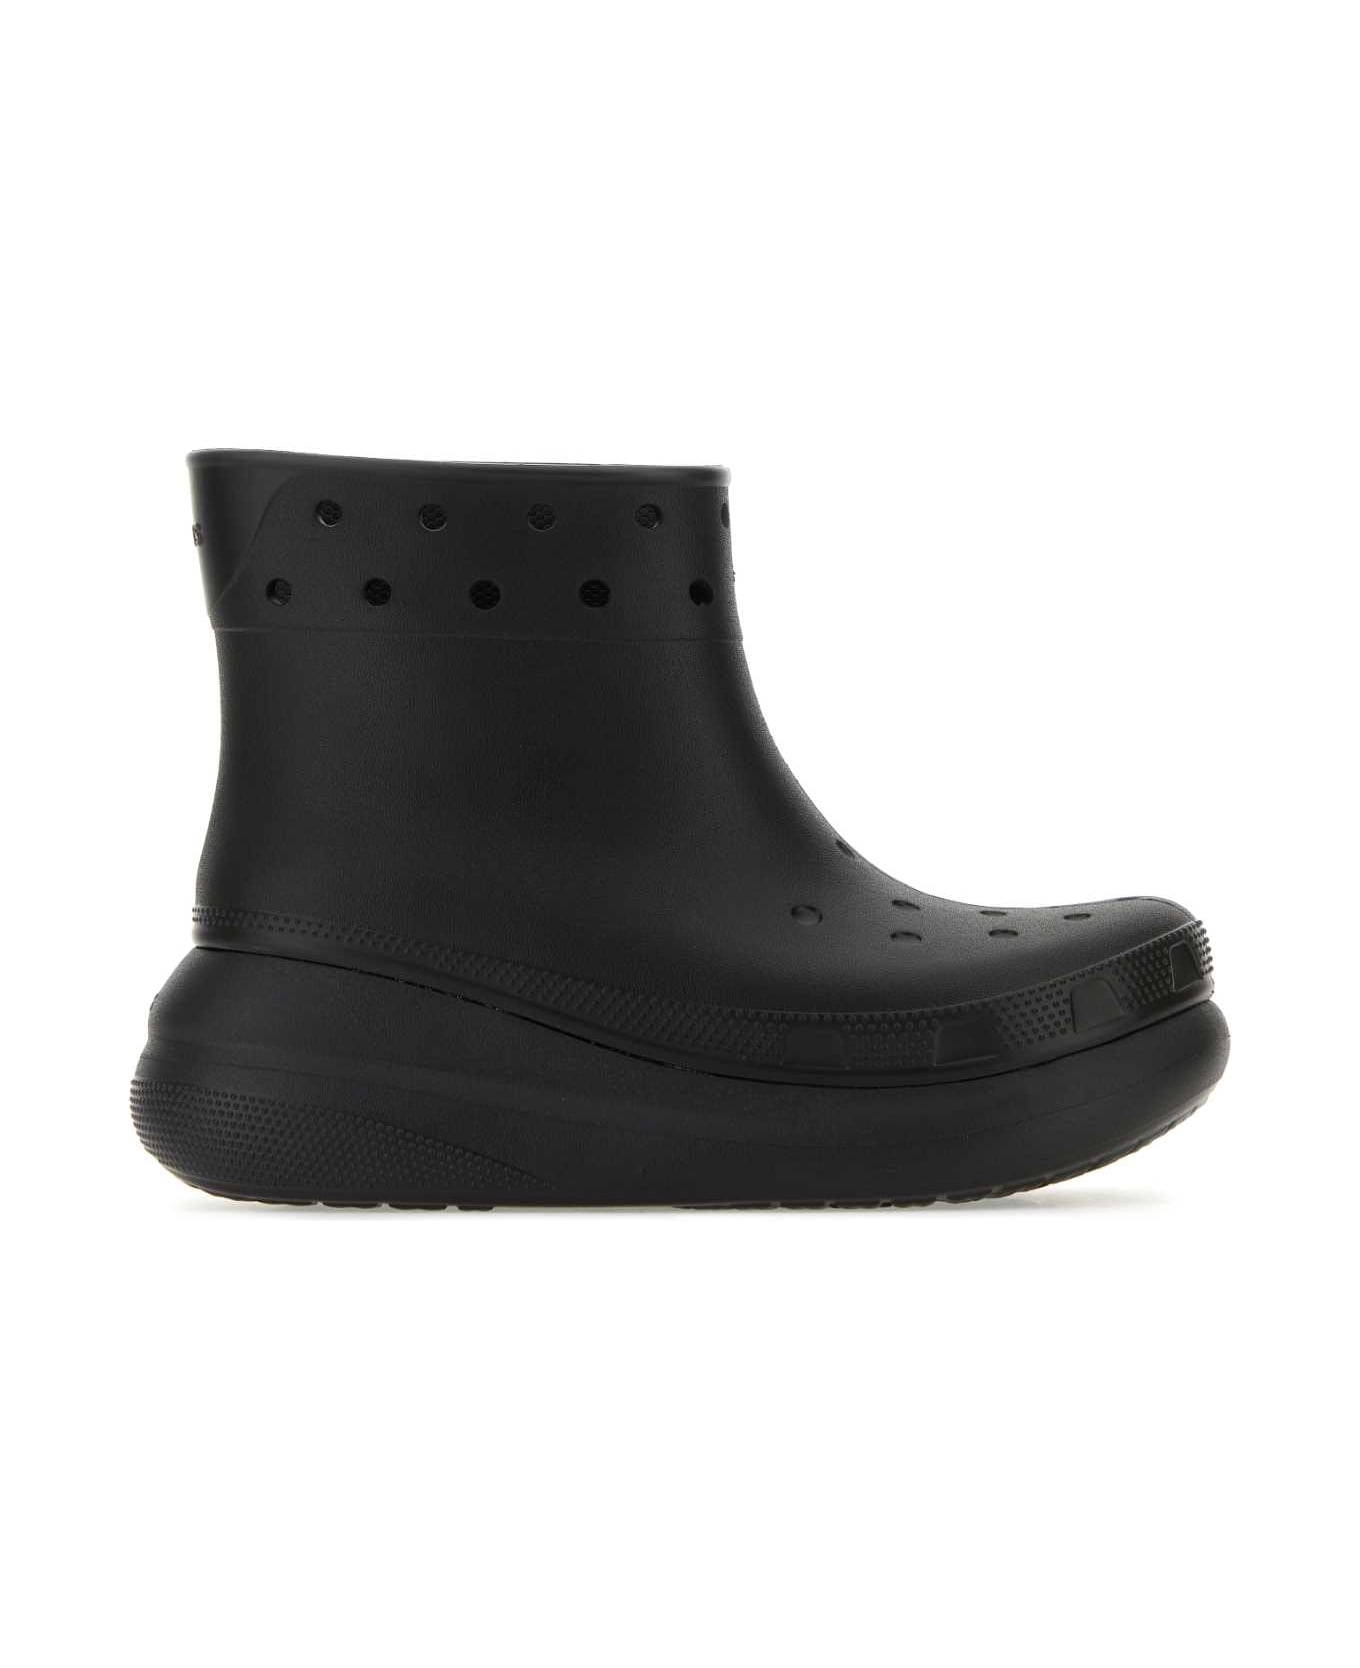 Crocs Black Crosliteâ ¢ Classic Crush Ankle Boots - BLACK ブーツ